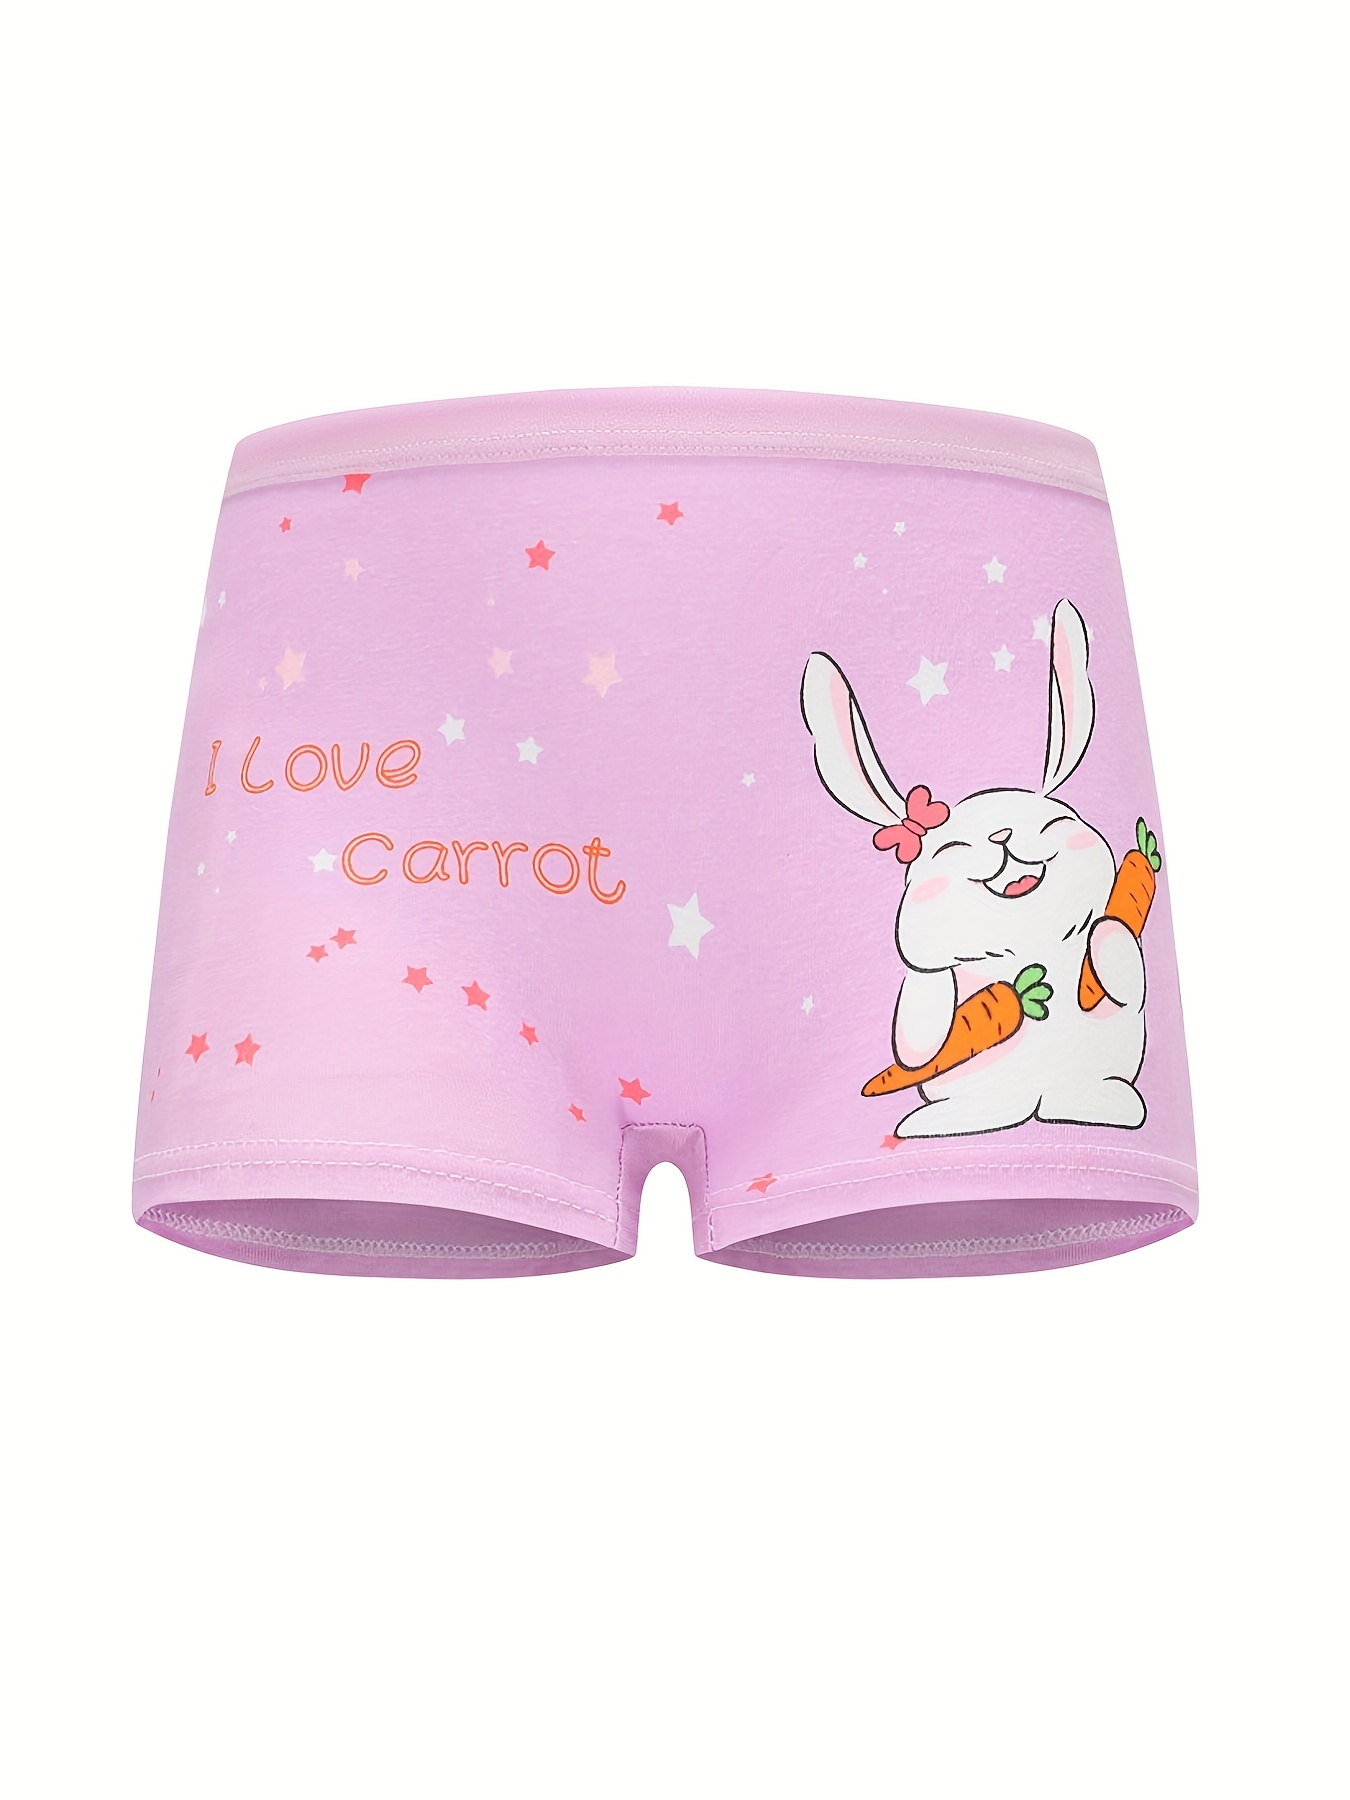 B91xZ Teen Girls Underwear Underpants Cute Cartoon Print Underwear Shorts  Cotton Ruffled Briefs Trunks 4PCS (Beige, 3-4 Years)